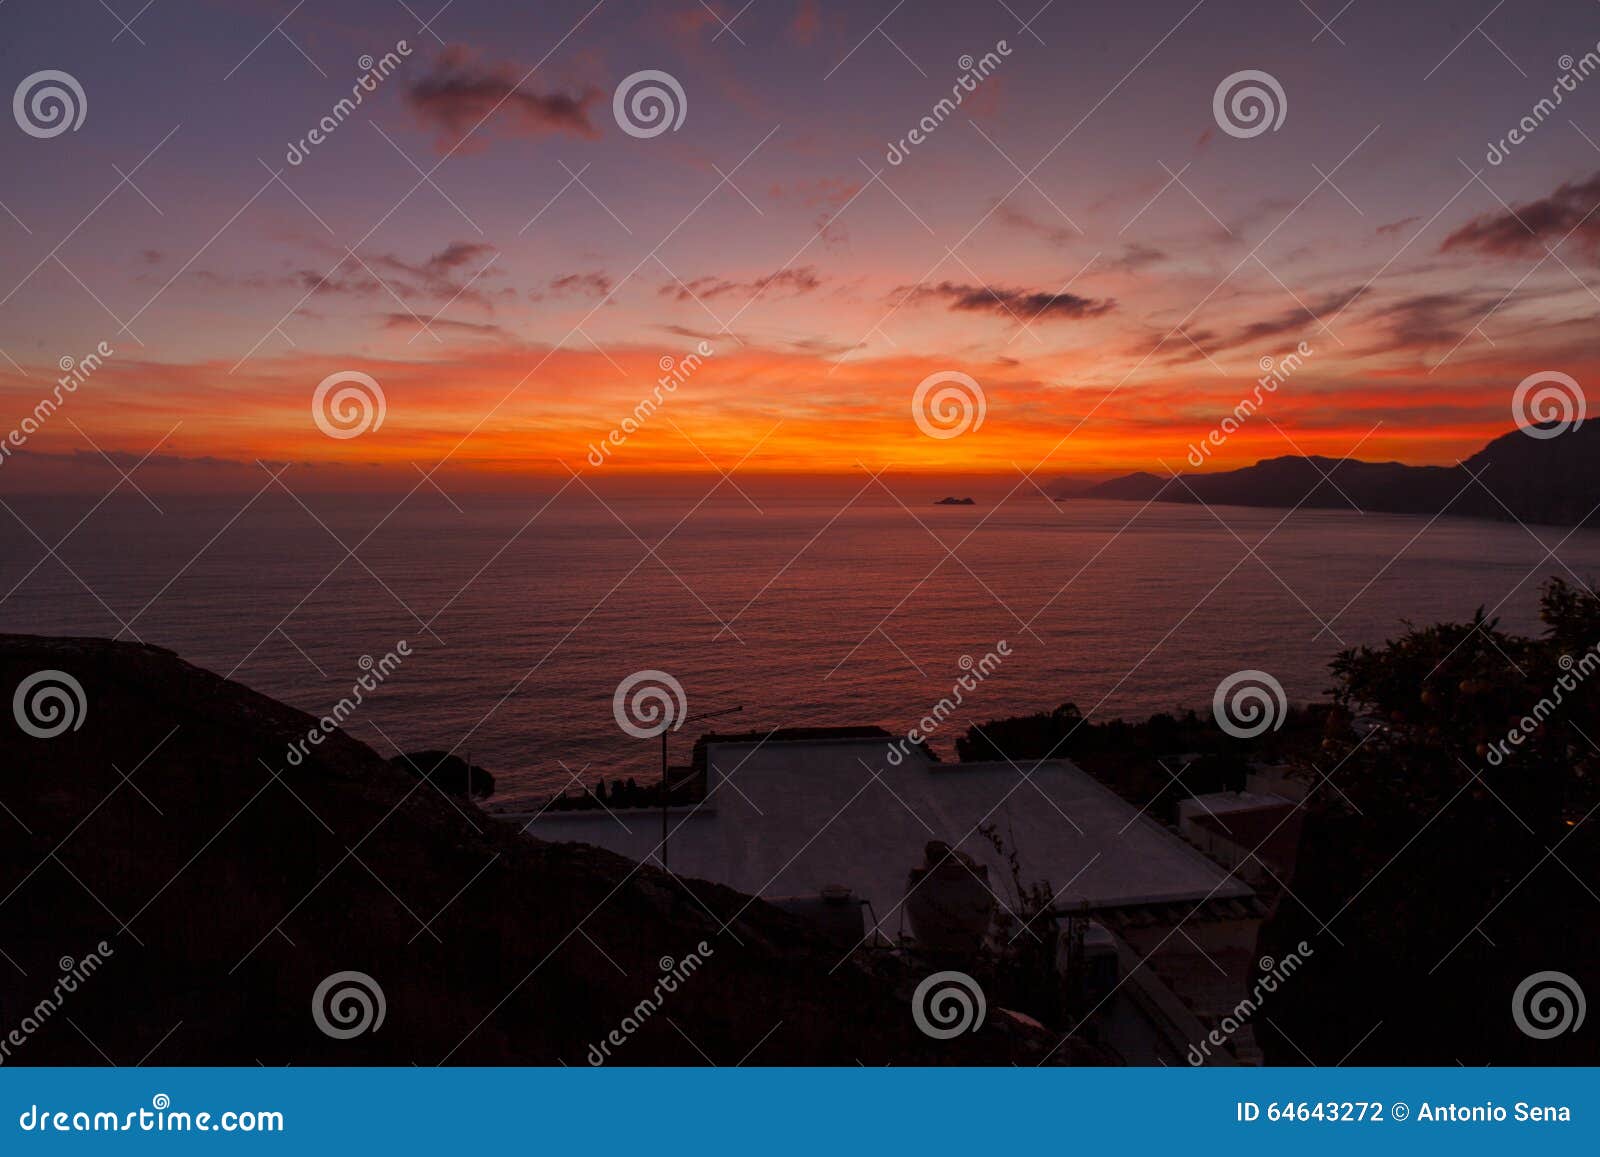 a sunset from praiano, from costiera amalfitana